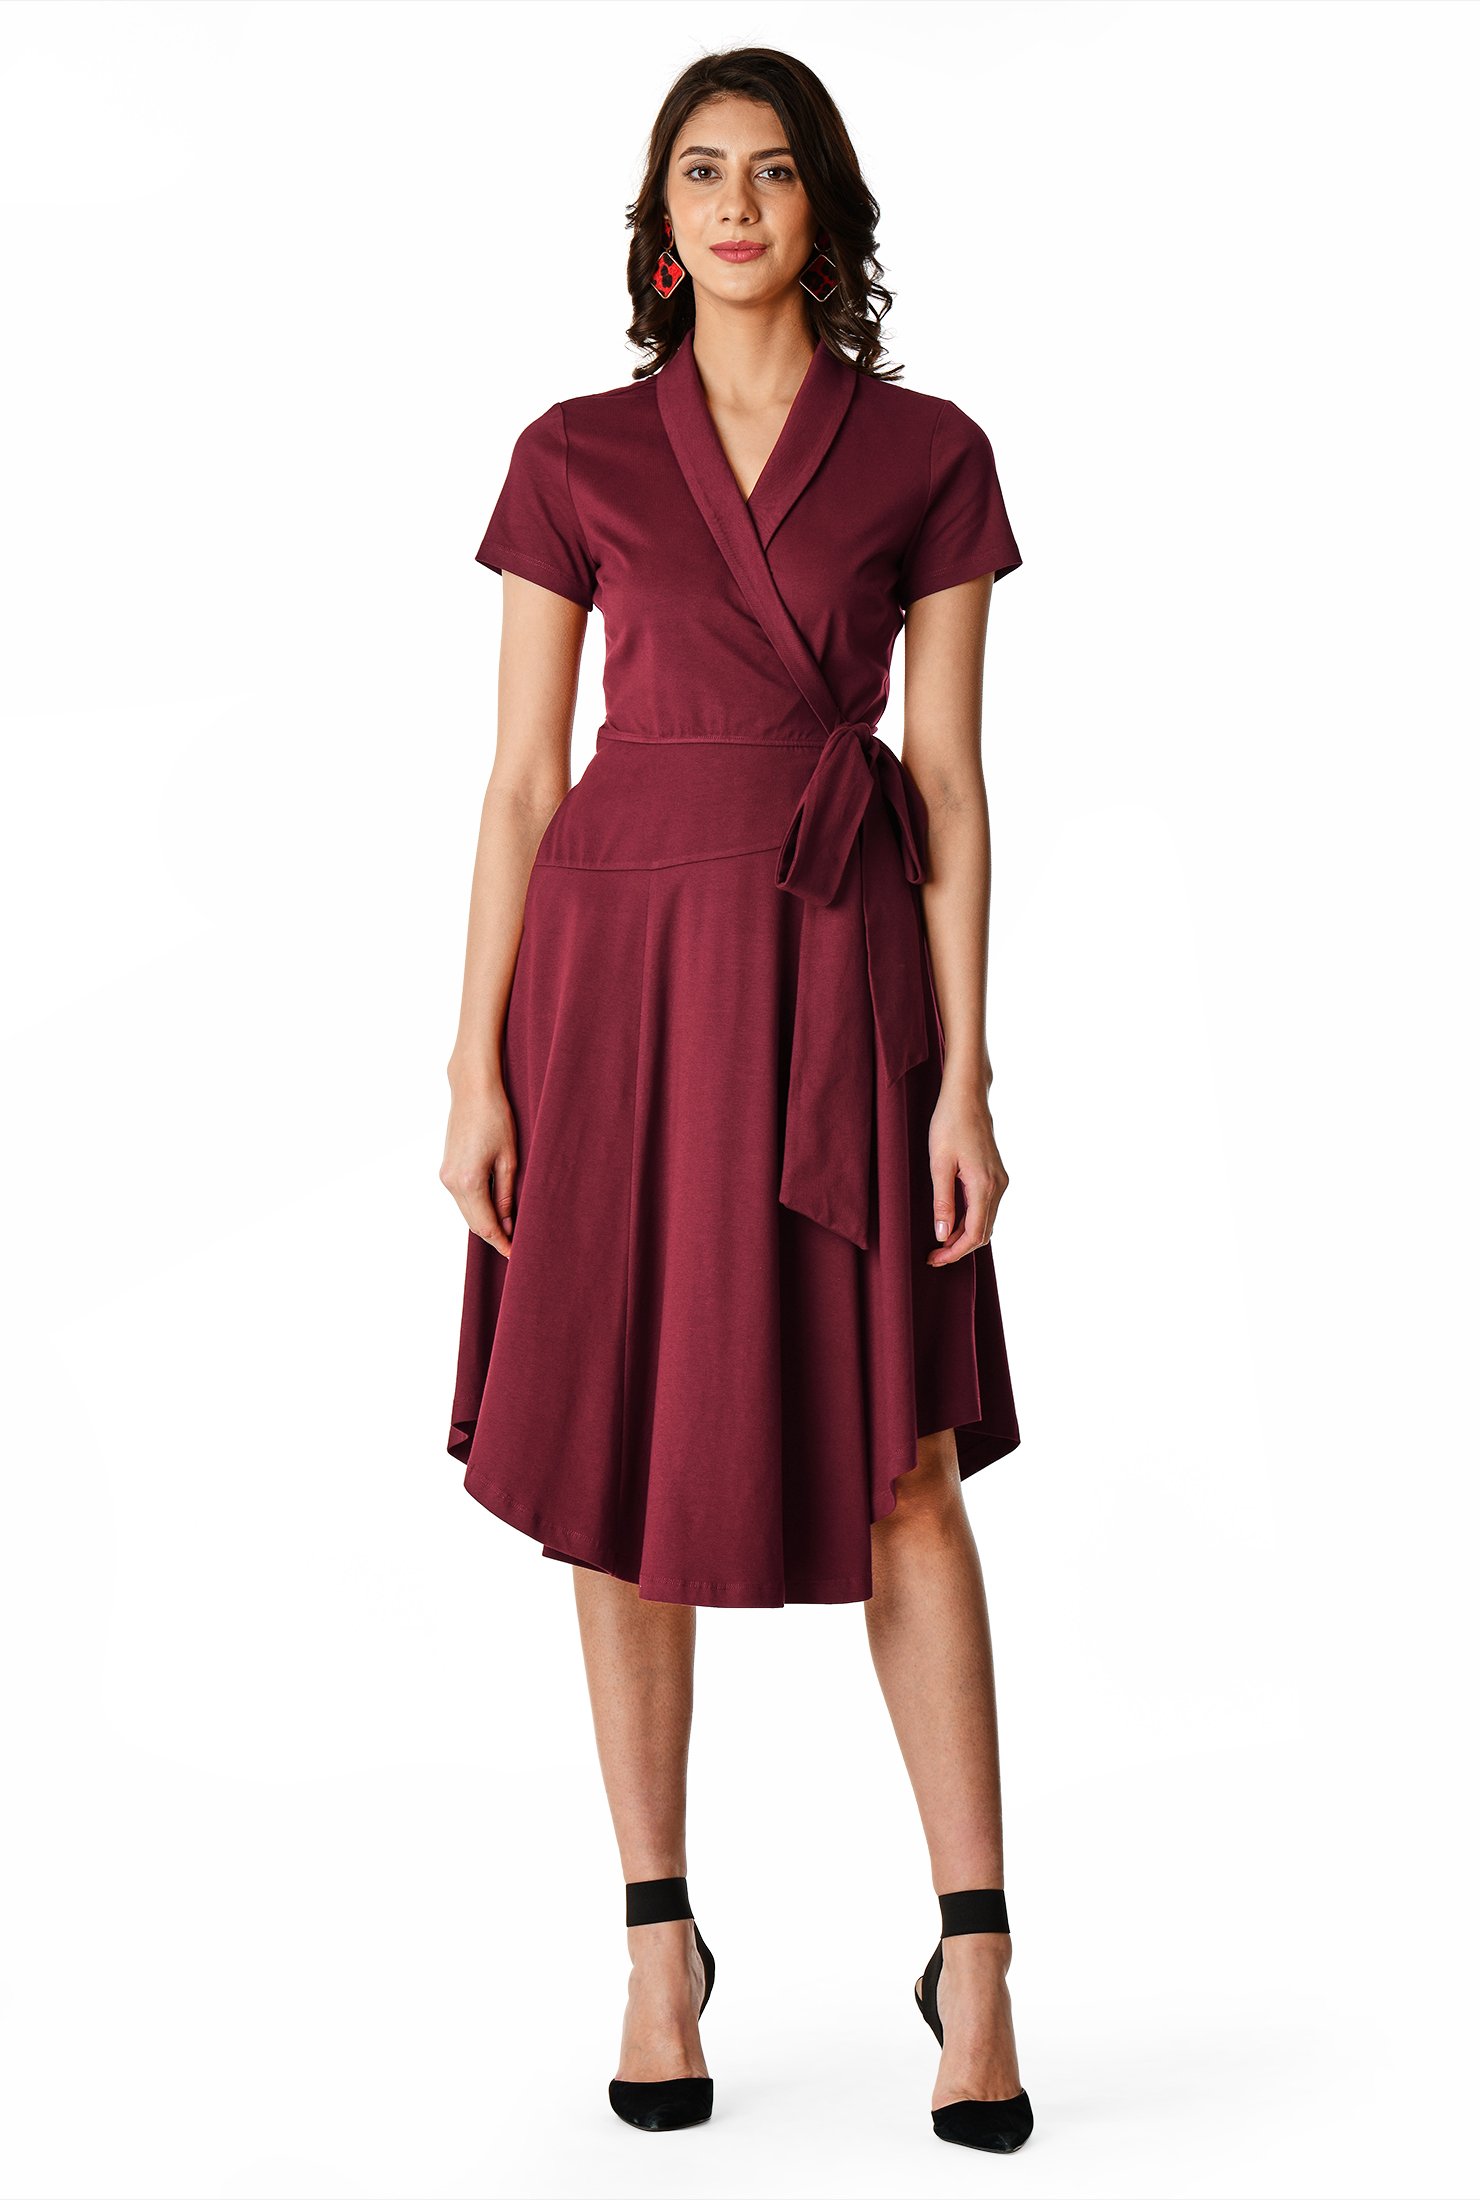 Shirttail hem cotton knit wrap dress 